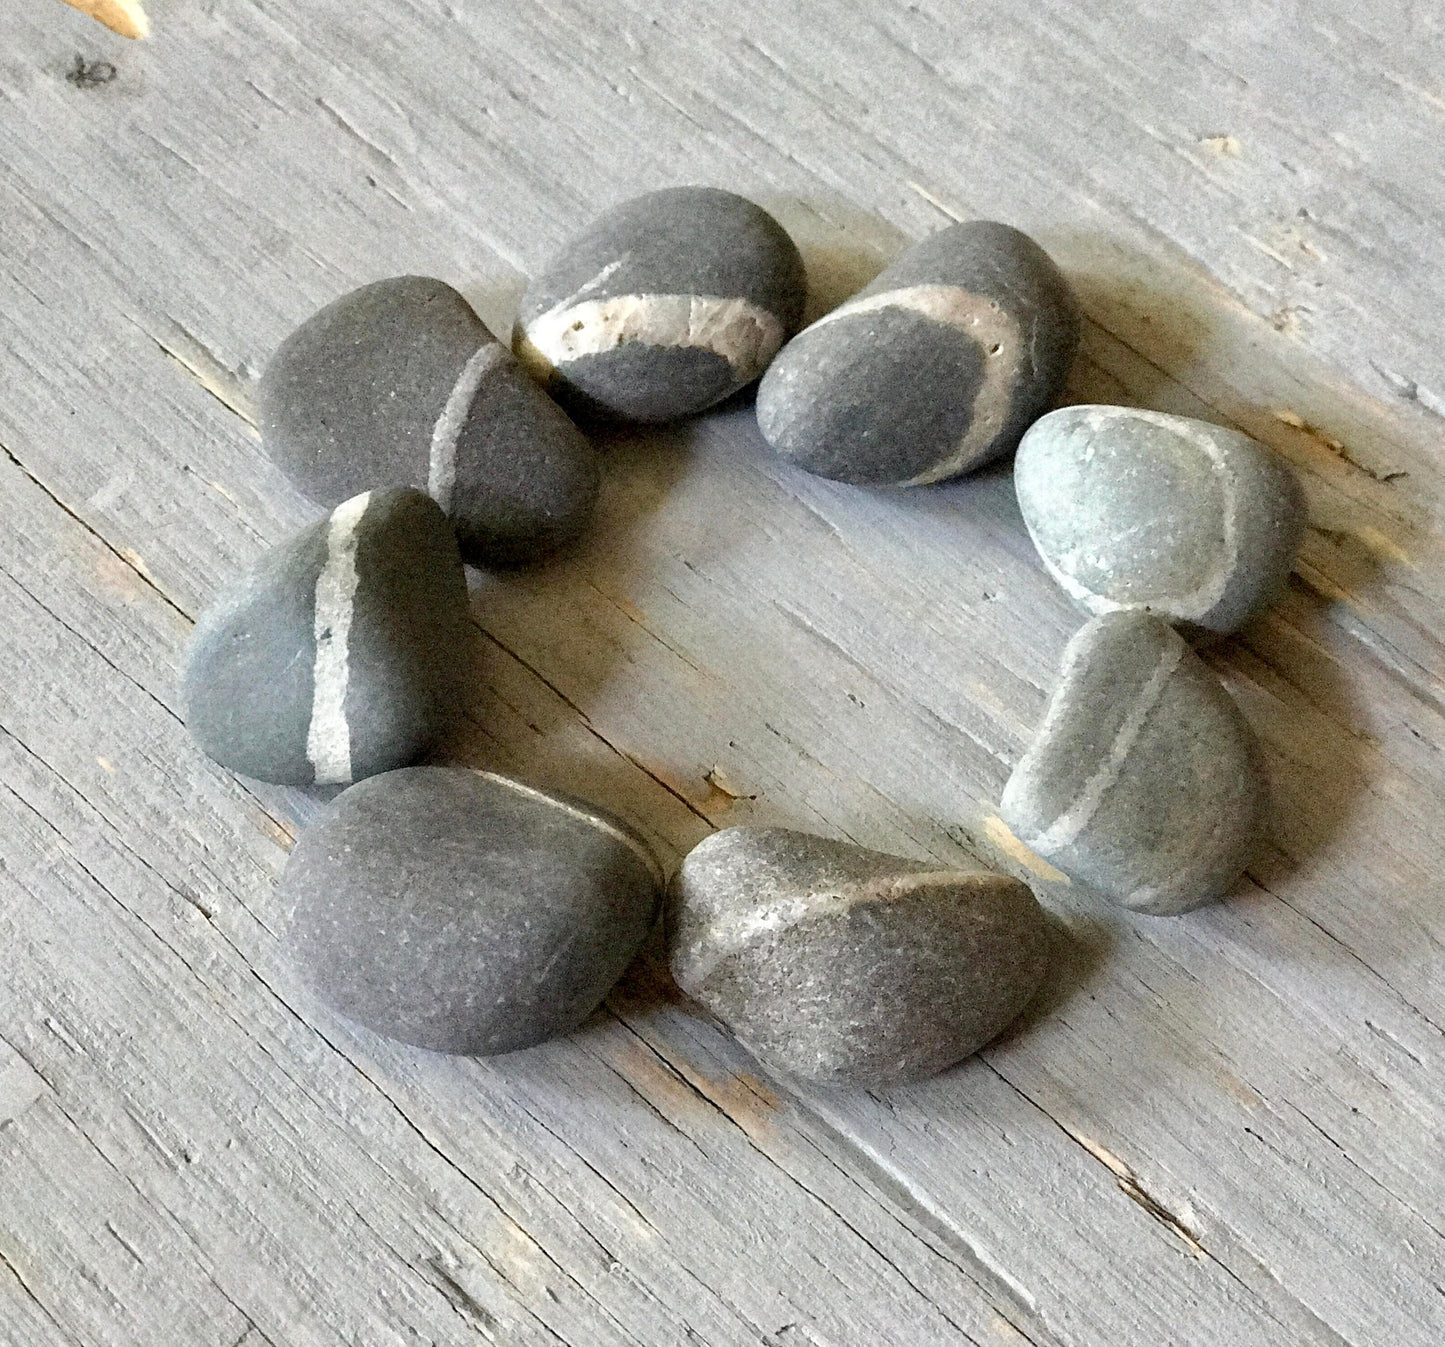 Lucky Wish Stones - 10 Maine Beach Stones with Single White Ring 2-2.5"